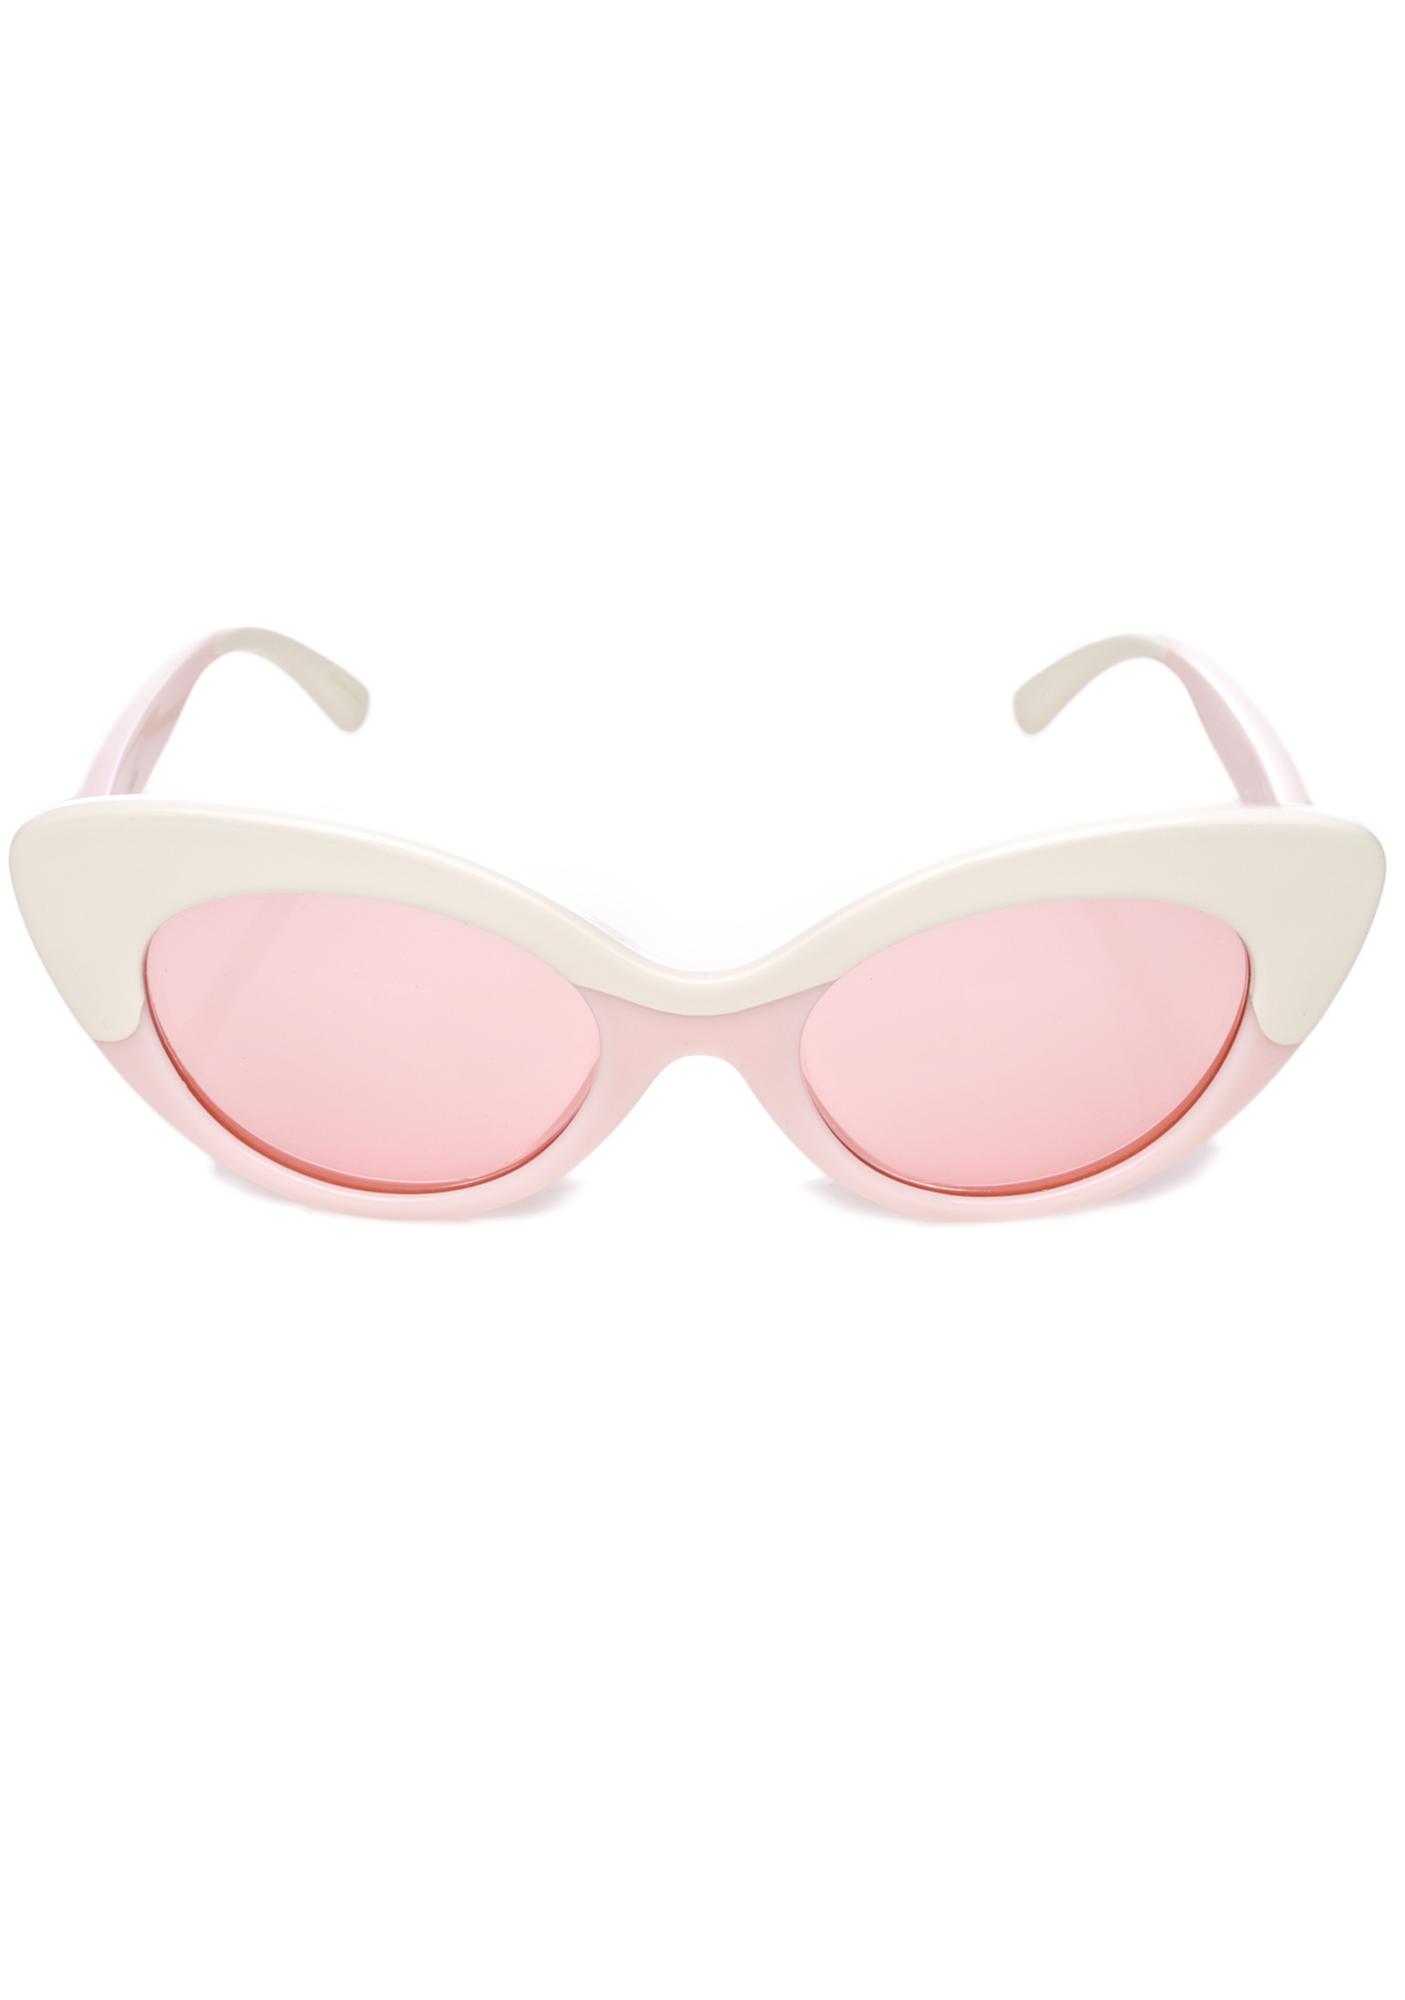 Crap Eyewear The Strawberry Wild Gift Sunglasses | Dolls Kill